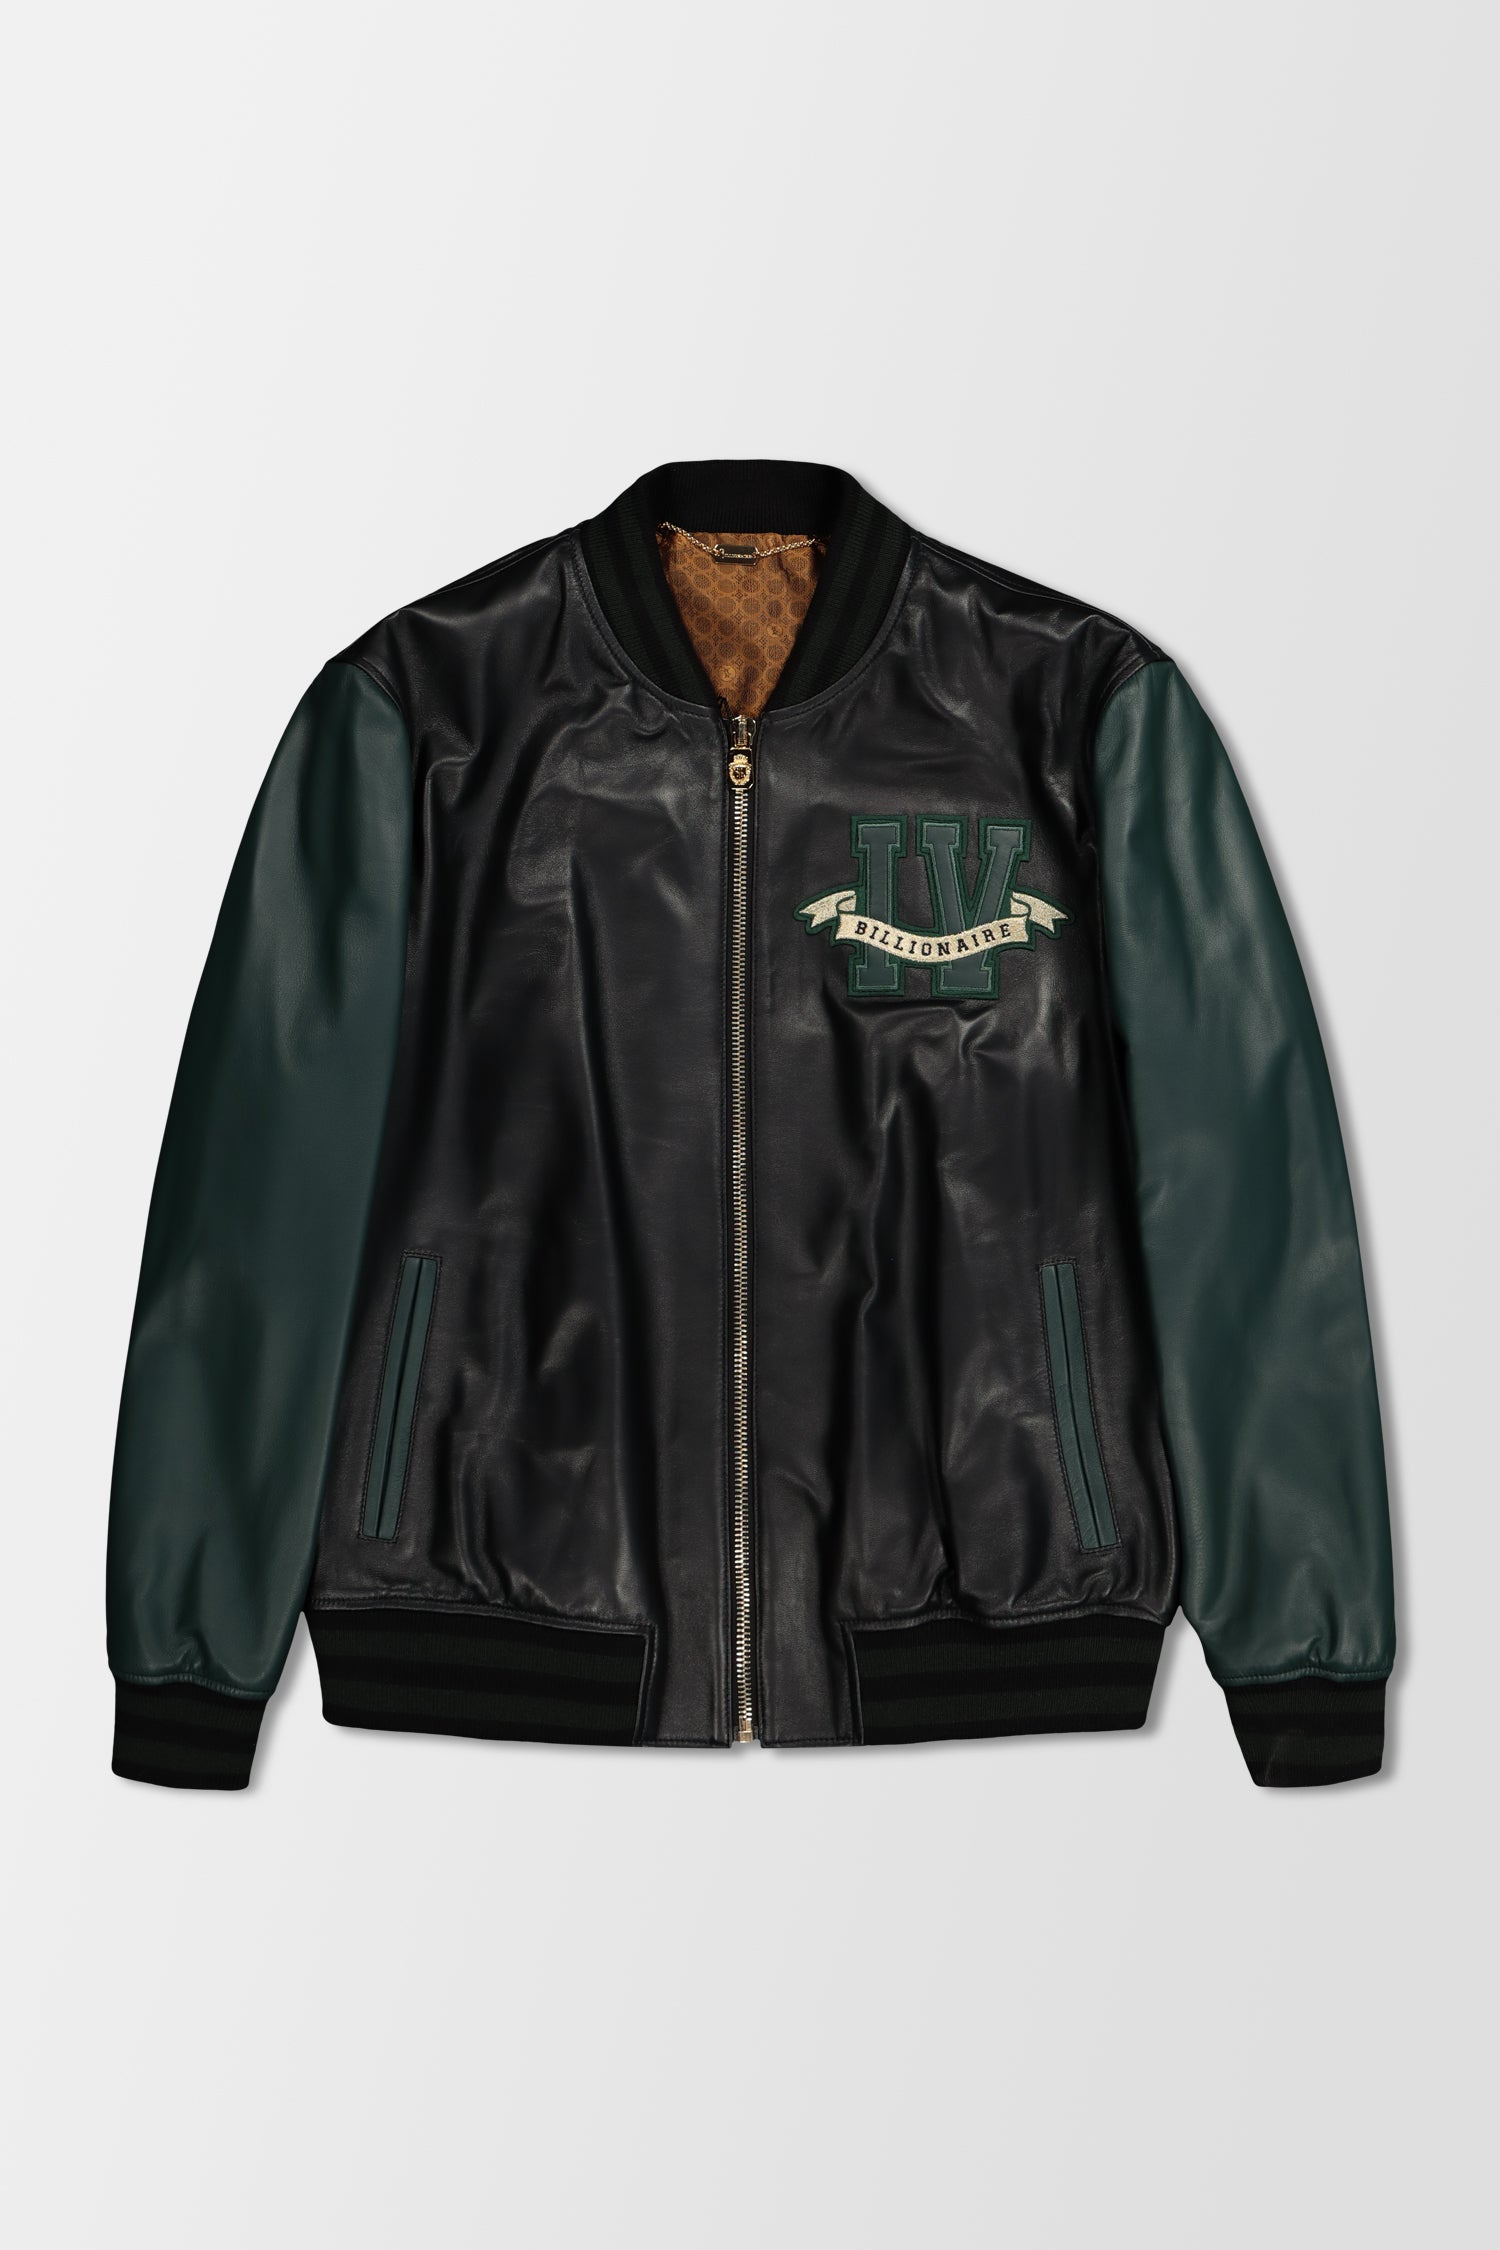 Billionaire Black Leather Bomber Jacket